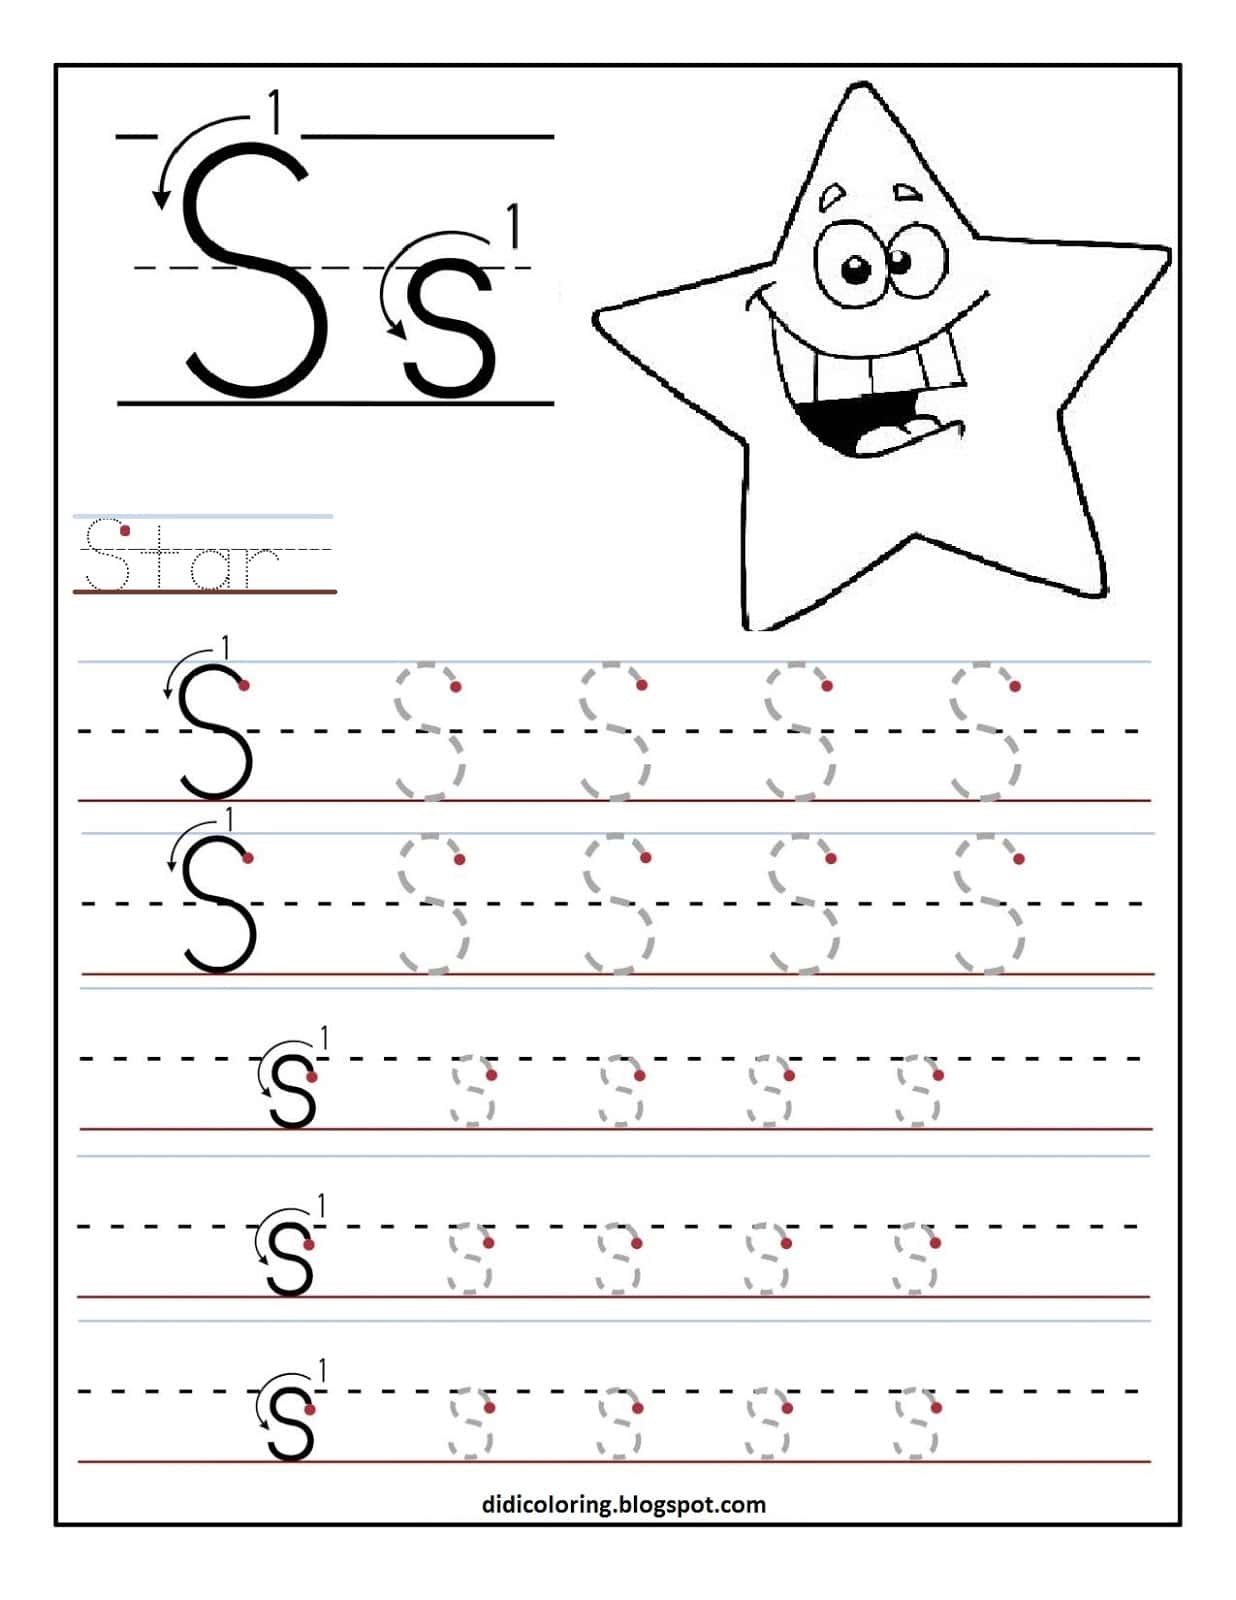 Printable Kindergarten Worksheets And English Handwriting Practice